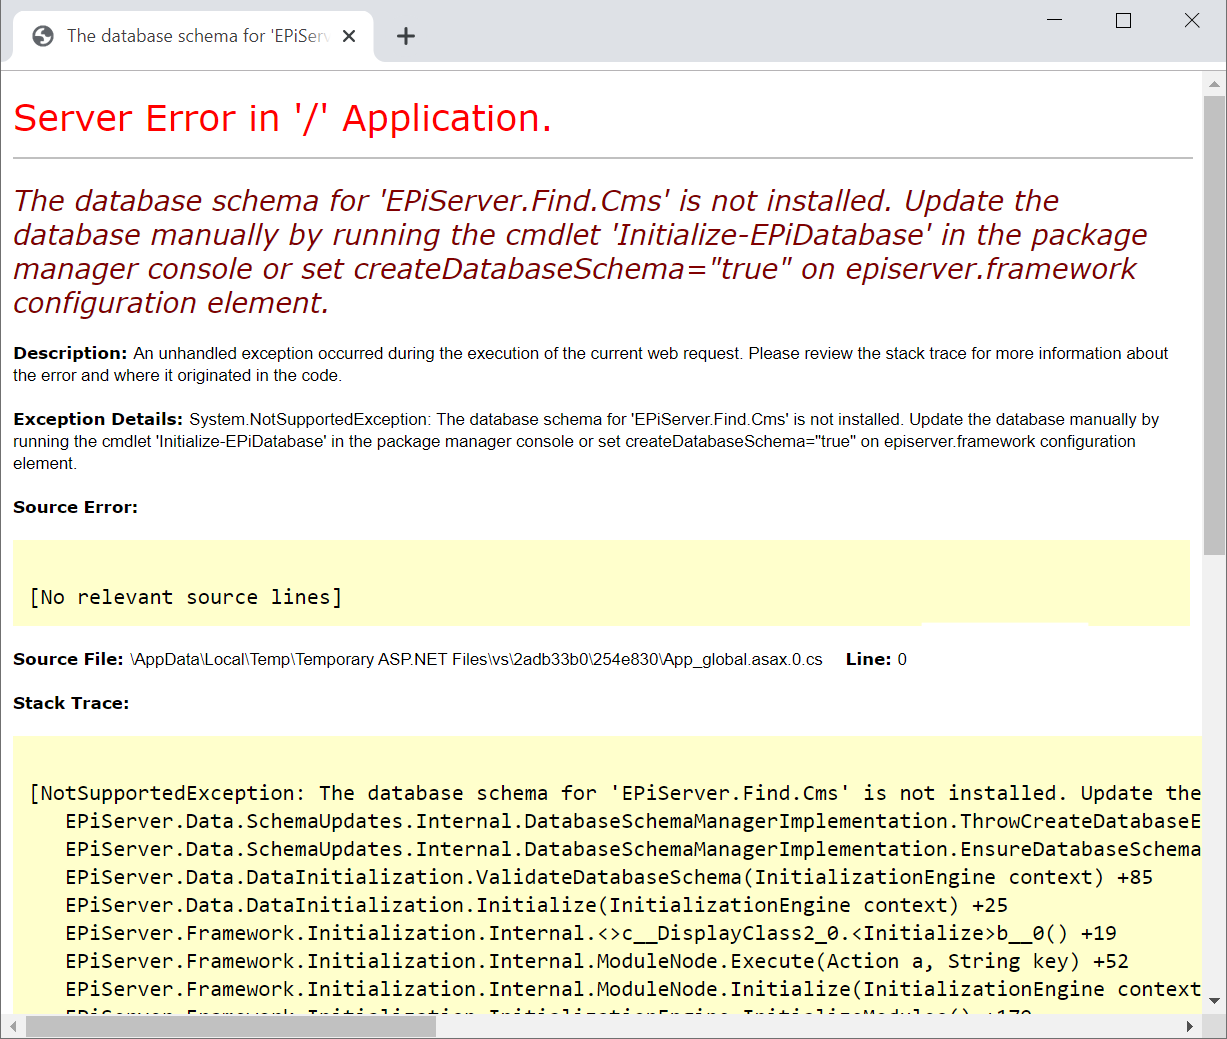 Server Error: The database schema for 'EPiServer.Find.Cms' is not installed.